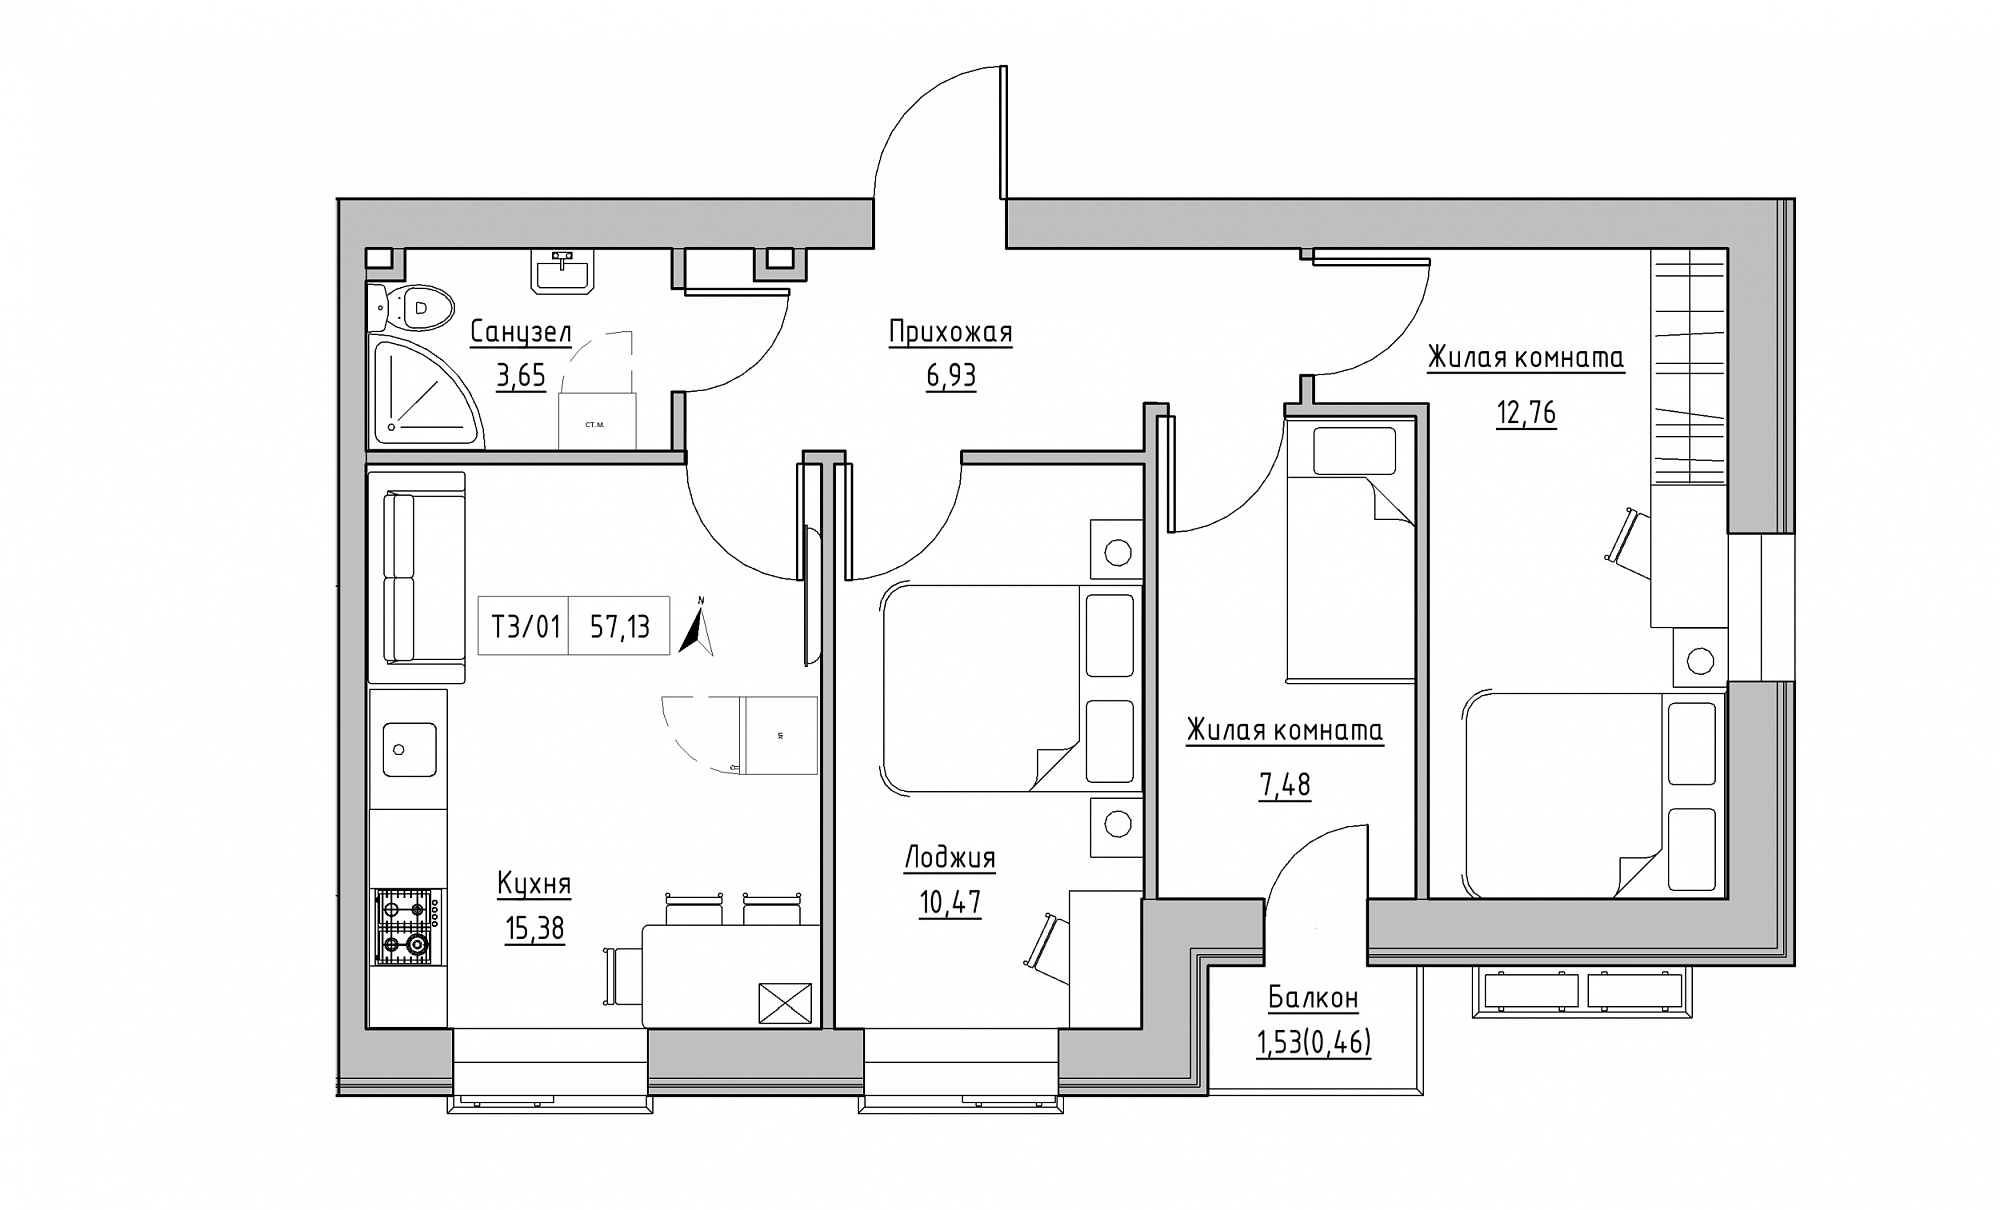 Planning 3-rm flats area 57.13m2, KS-015-03/0008.